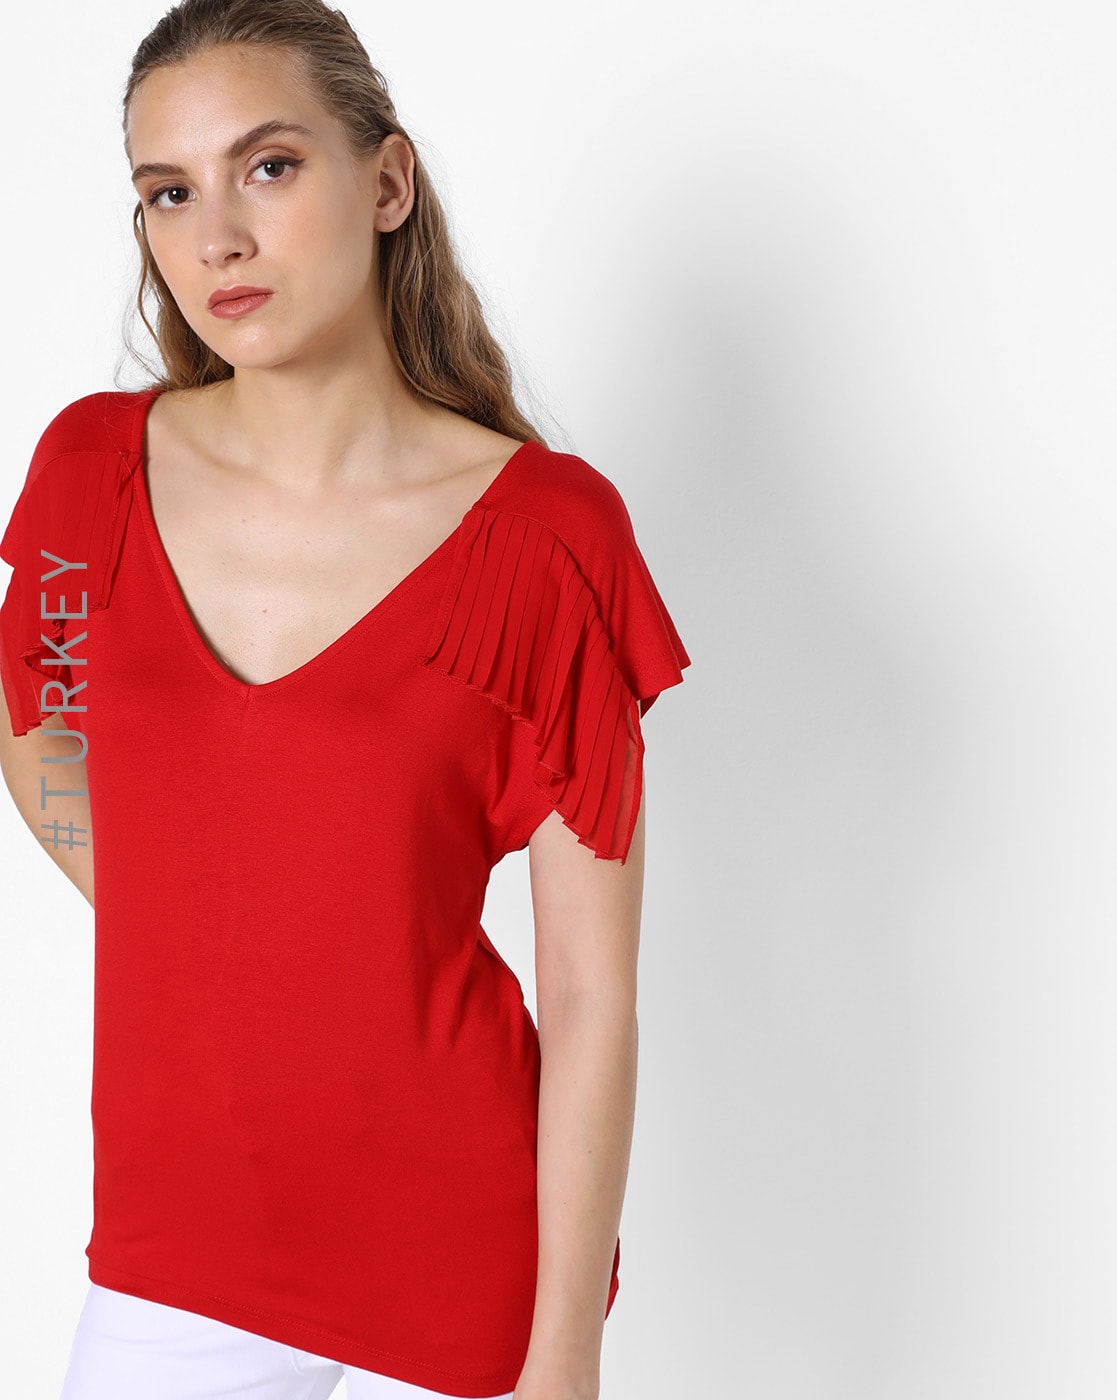 Deep V Neck Shirts Women,New Edition T Shirts for Women